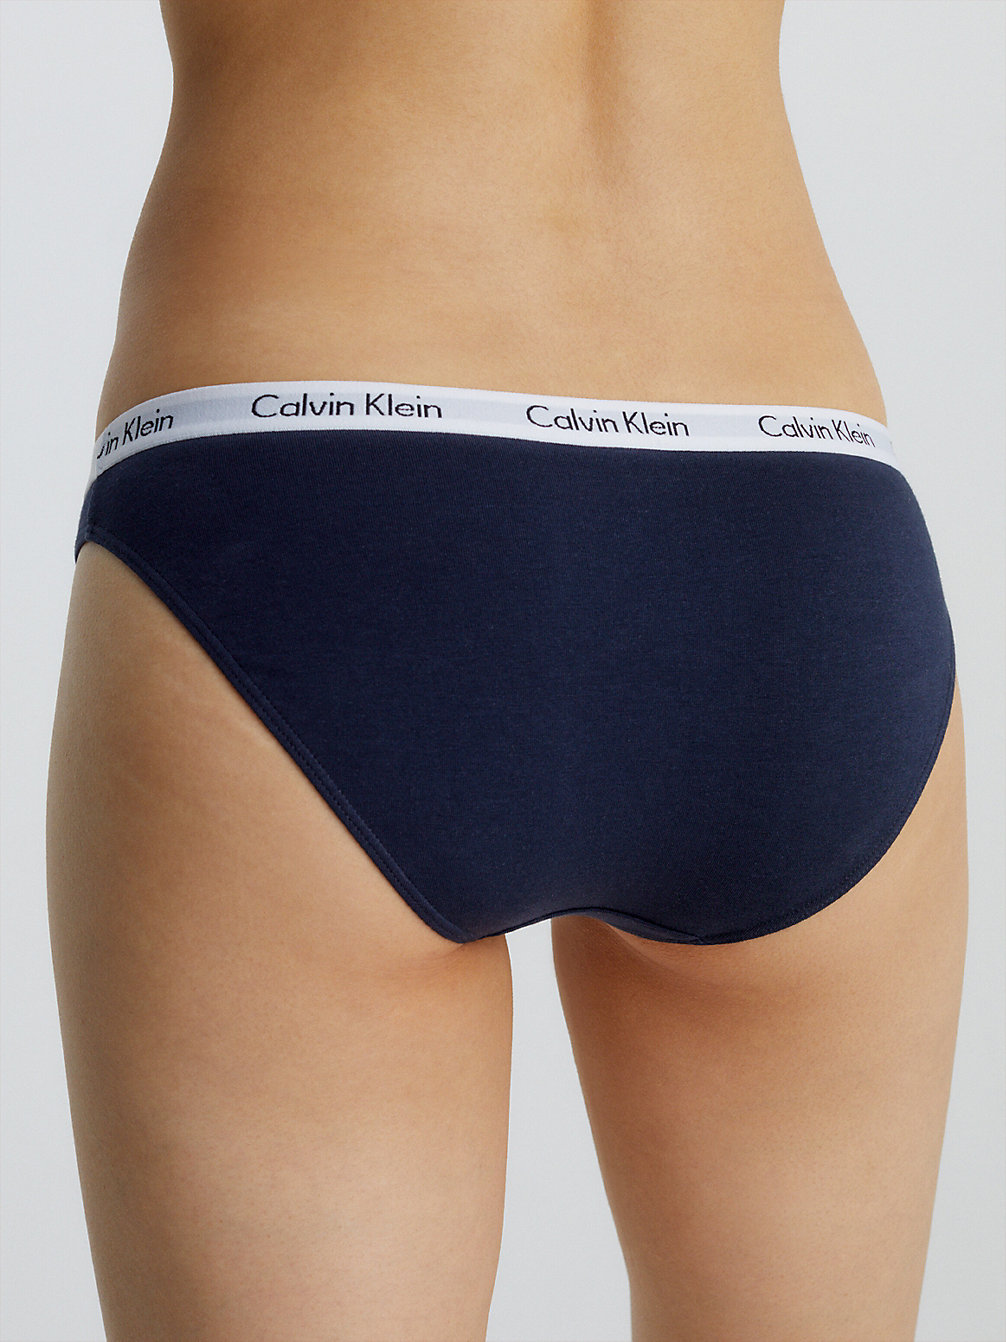 SHORELINE Bikini Brief - Carousel undefined women Calvin Klein